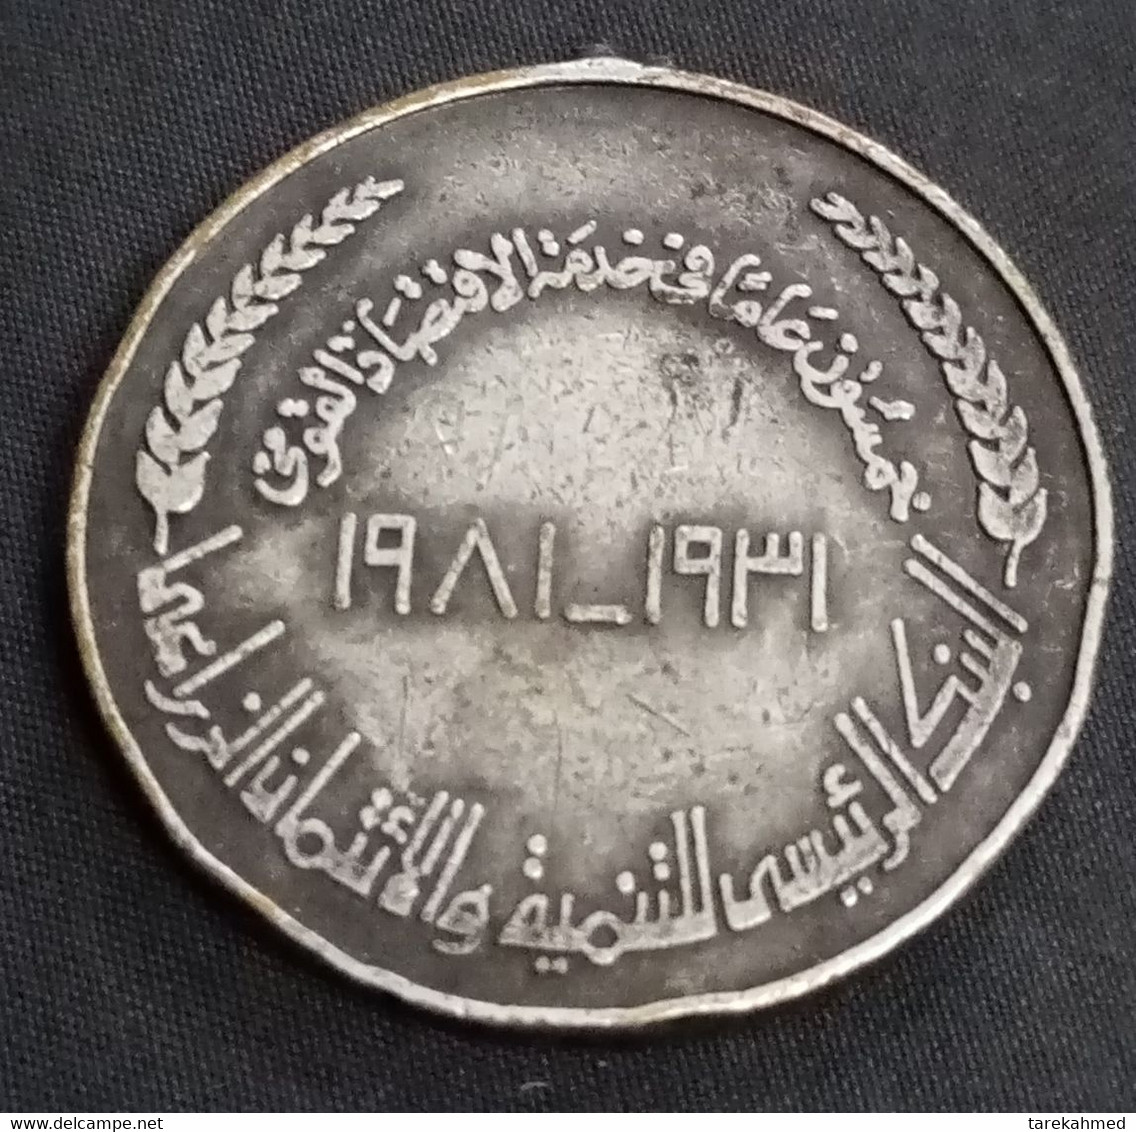 Egypt 1981 , Medal Of Principal Bank For Development & Agricultural , Tokbag - Professionals / Firms